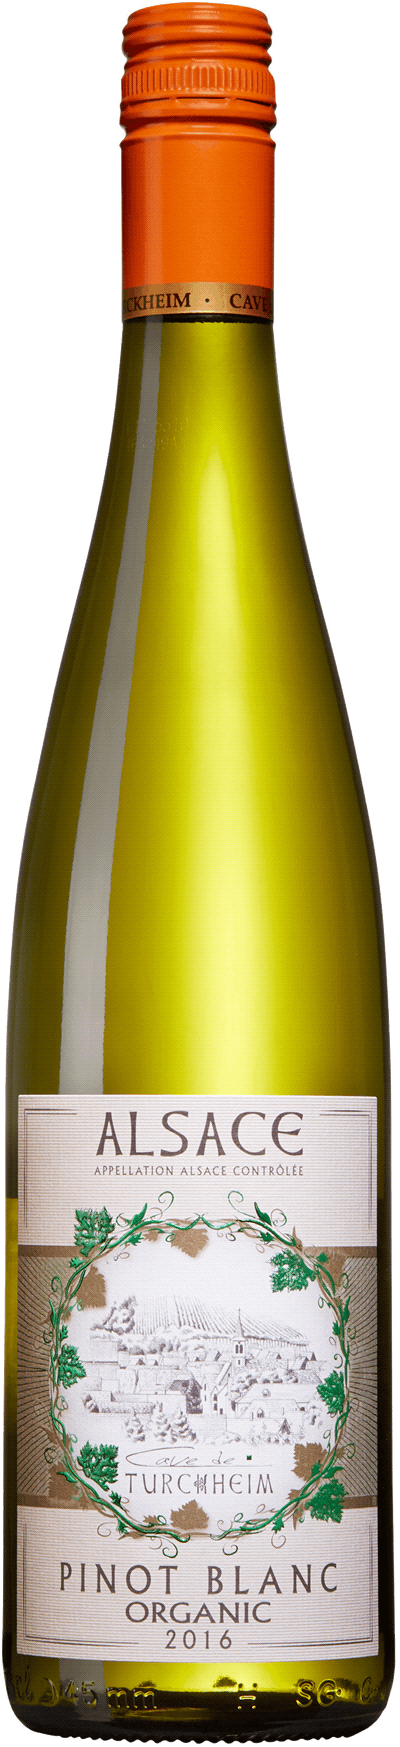 Produktbild för Turckheim Pinot Blanc Organic